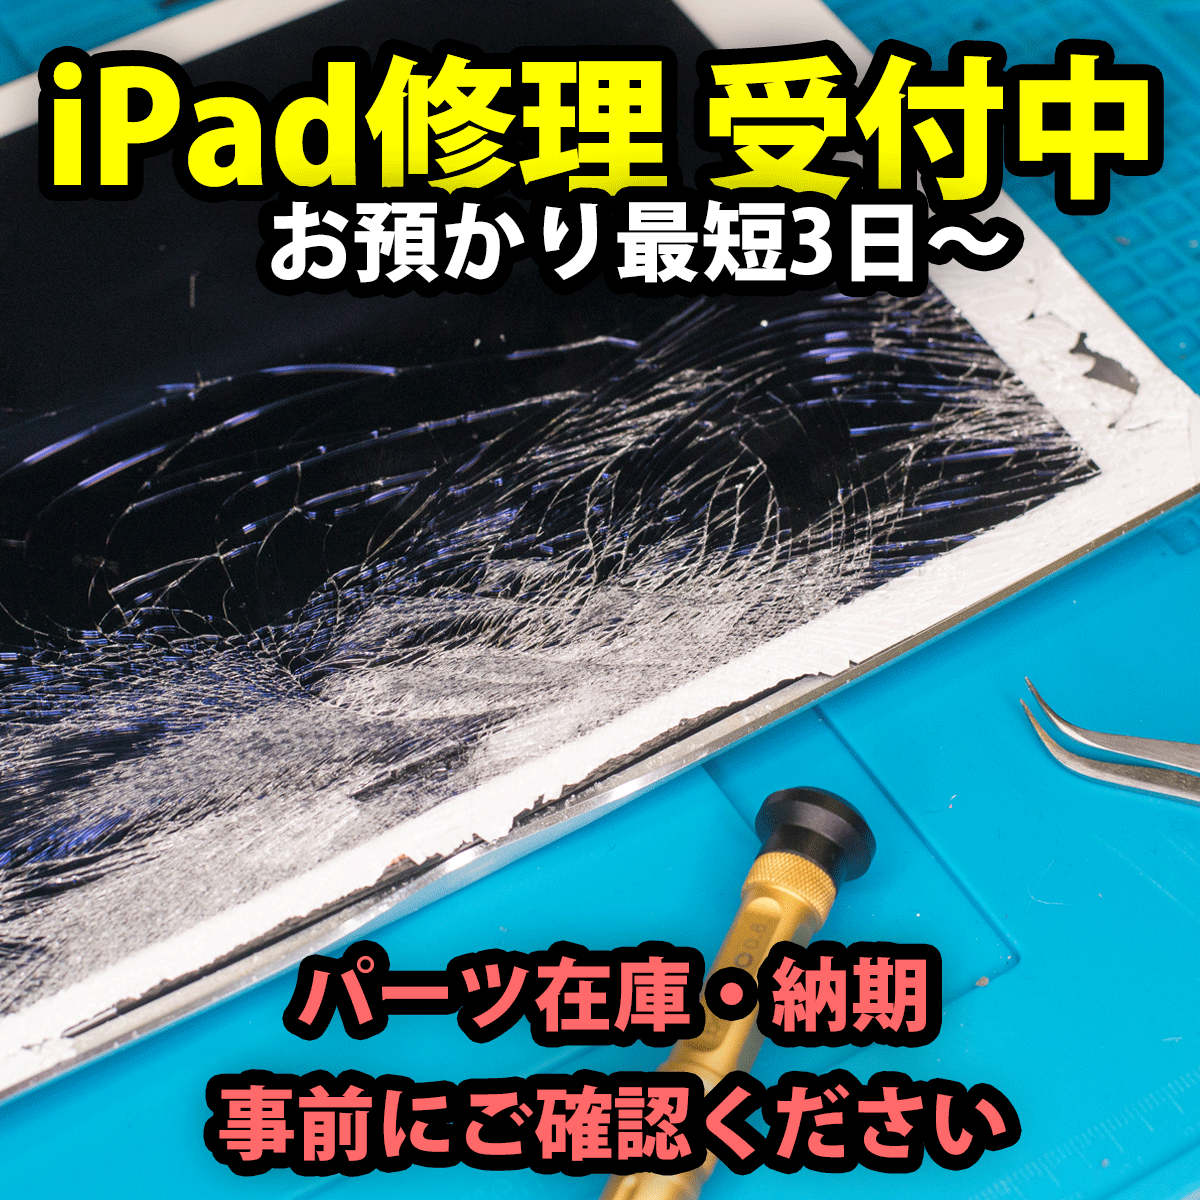 iPad修理s2